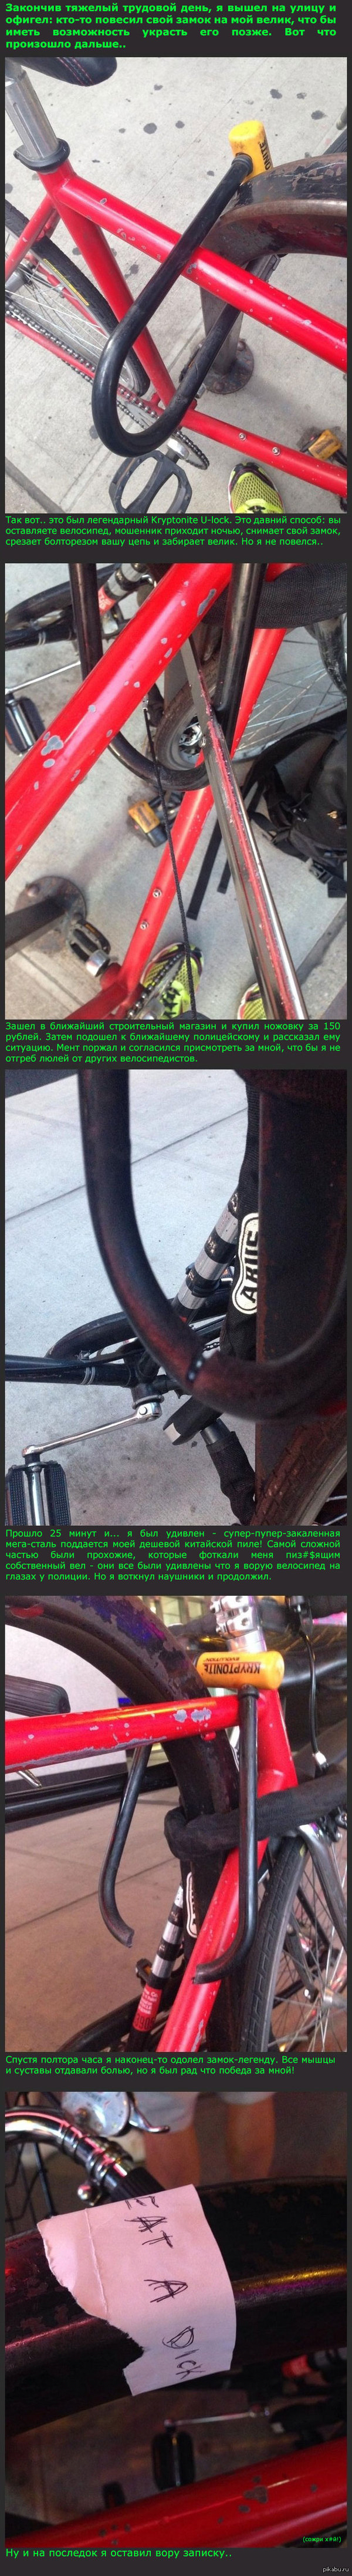 Bicycle theft - A bike, Lock, Thief, Saw, Longpost